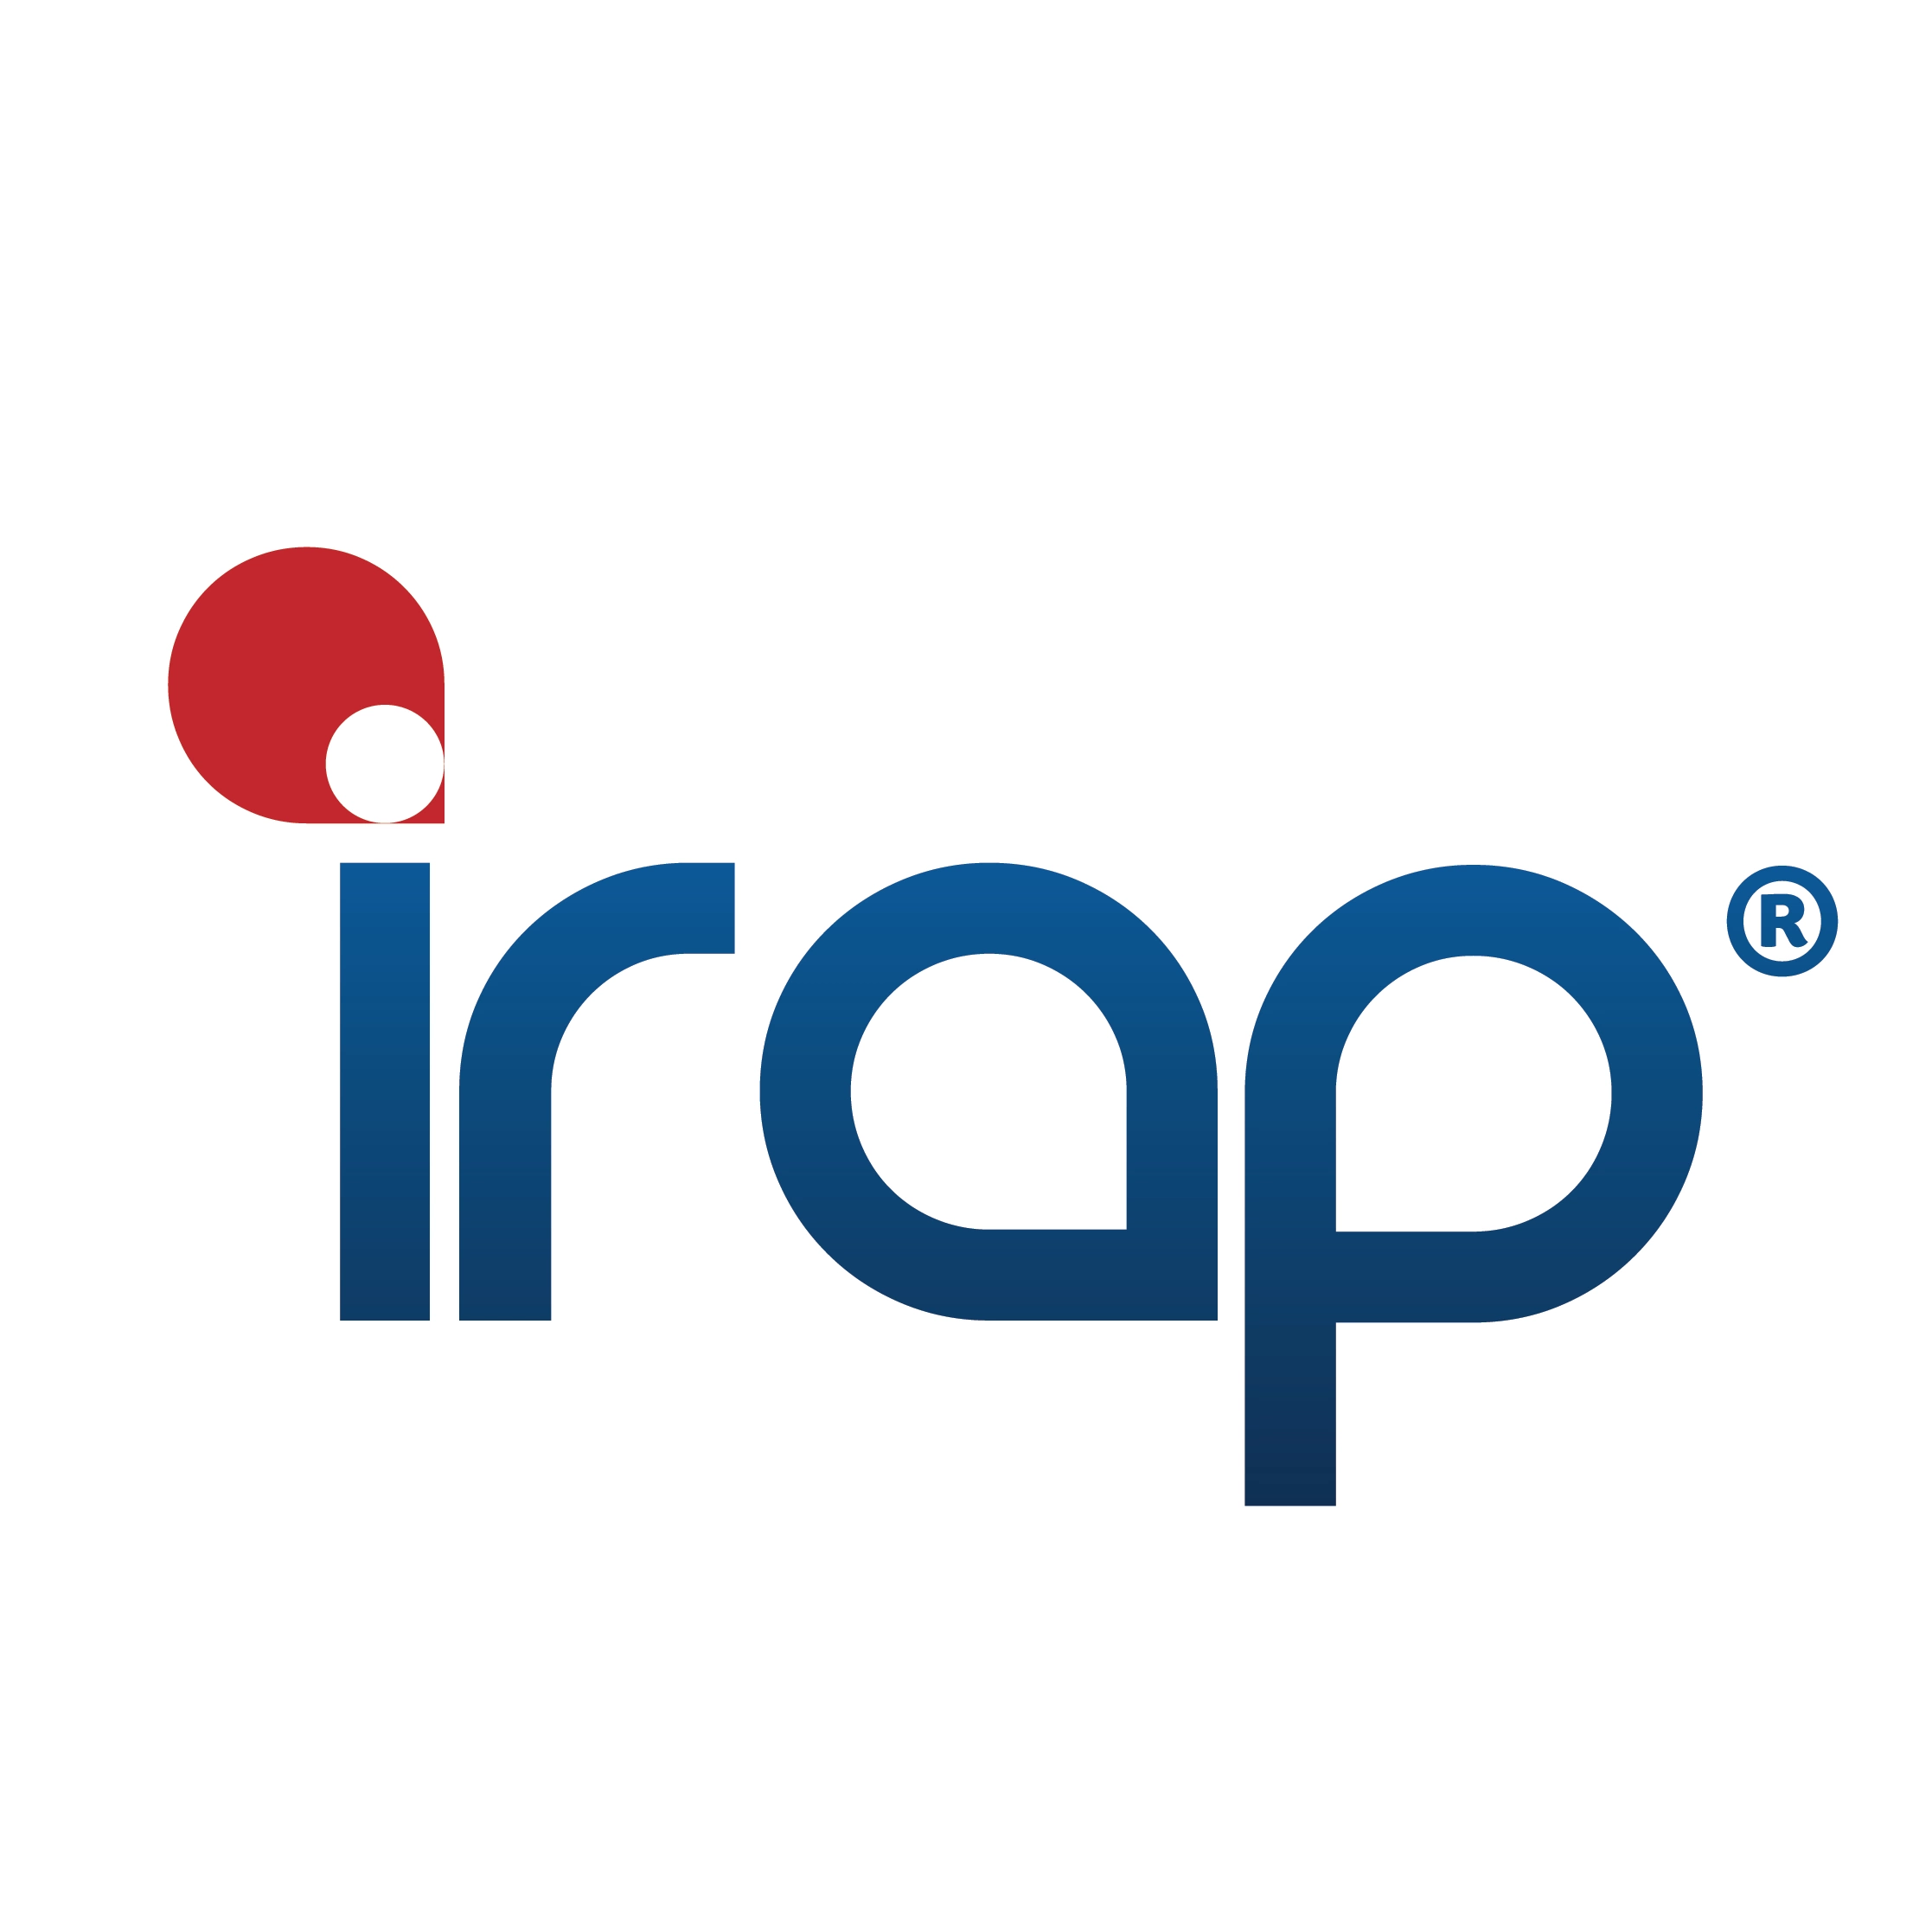 IRAP logo